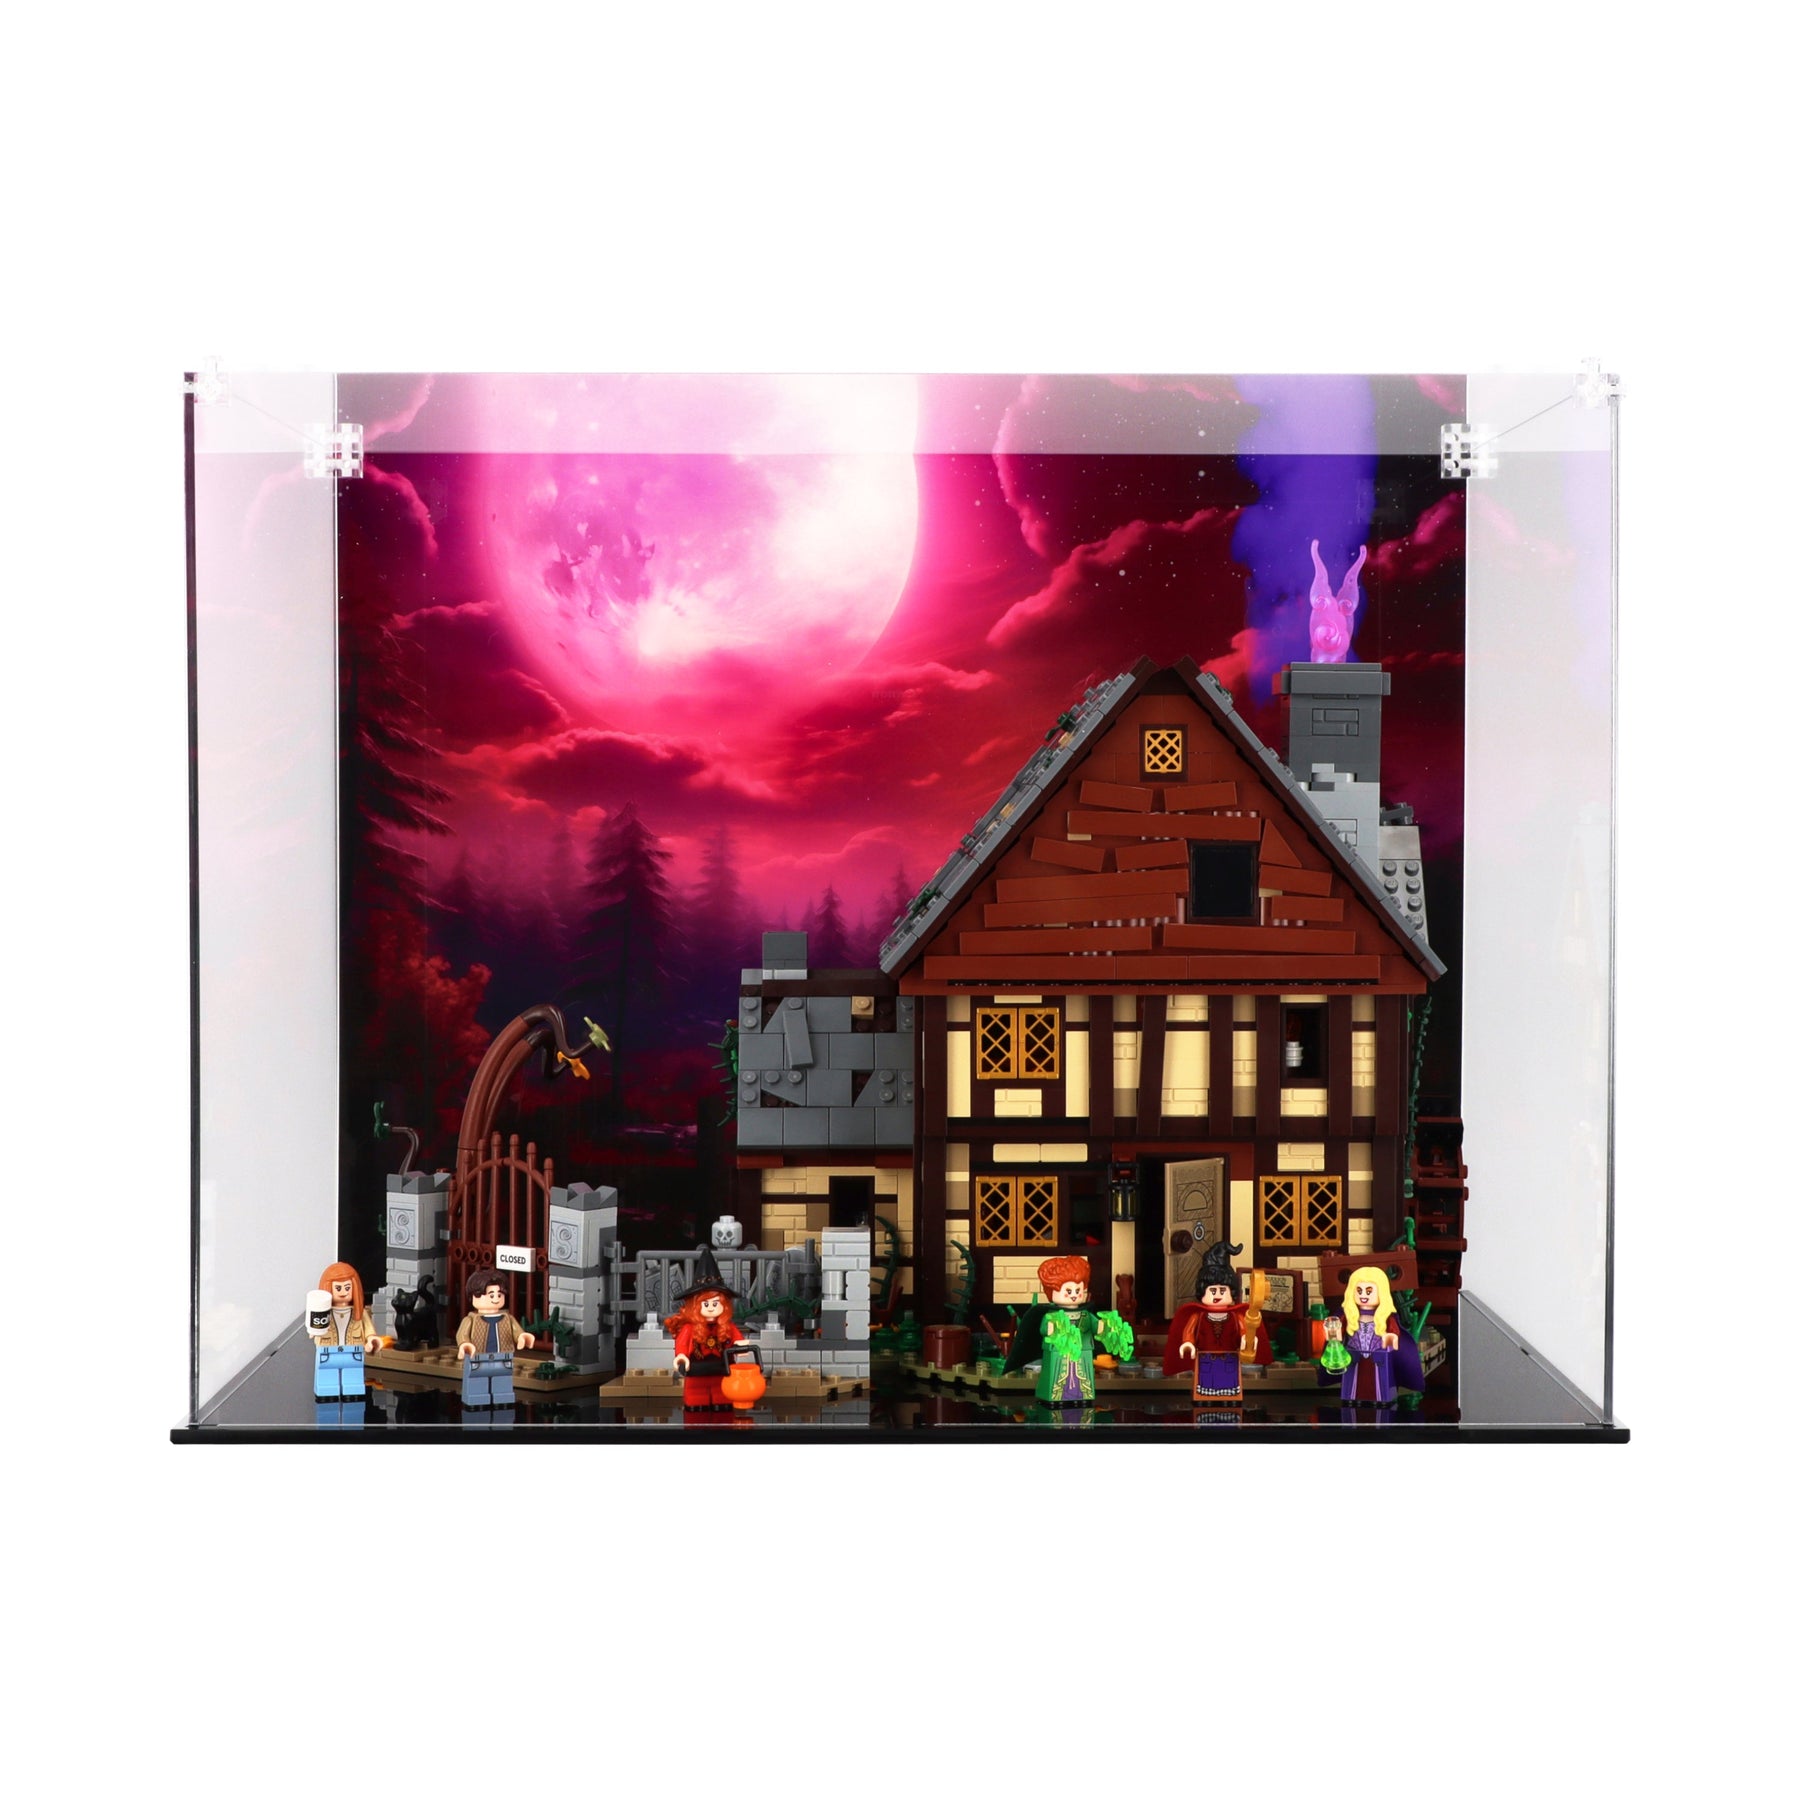 Lego 21341 Disney Hocus Pocus: The Sanderson Sisters Cottage - Display Case